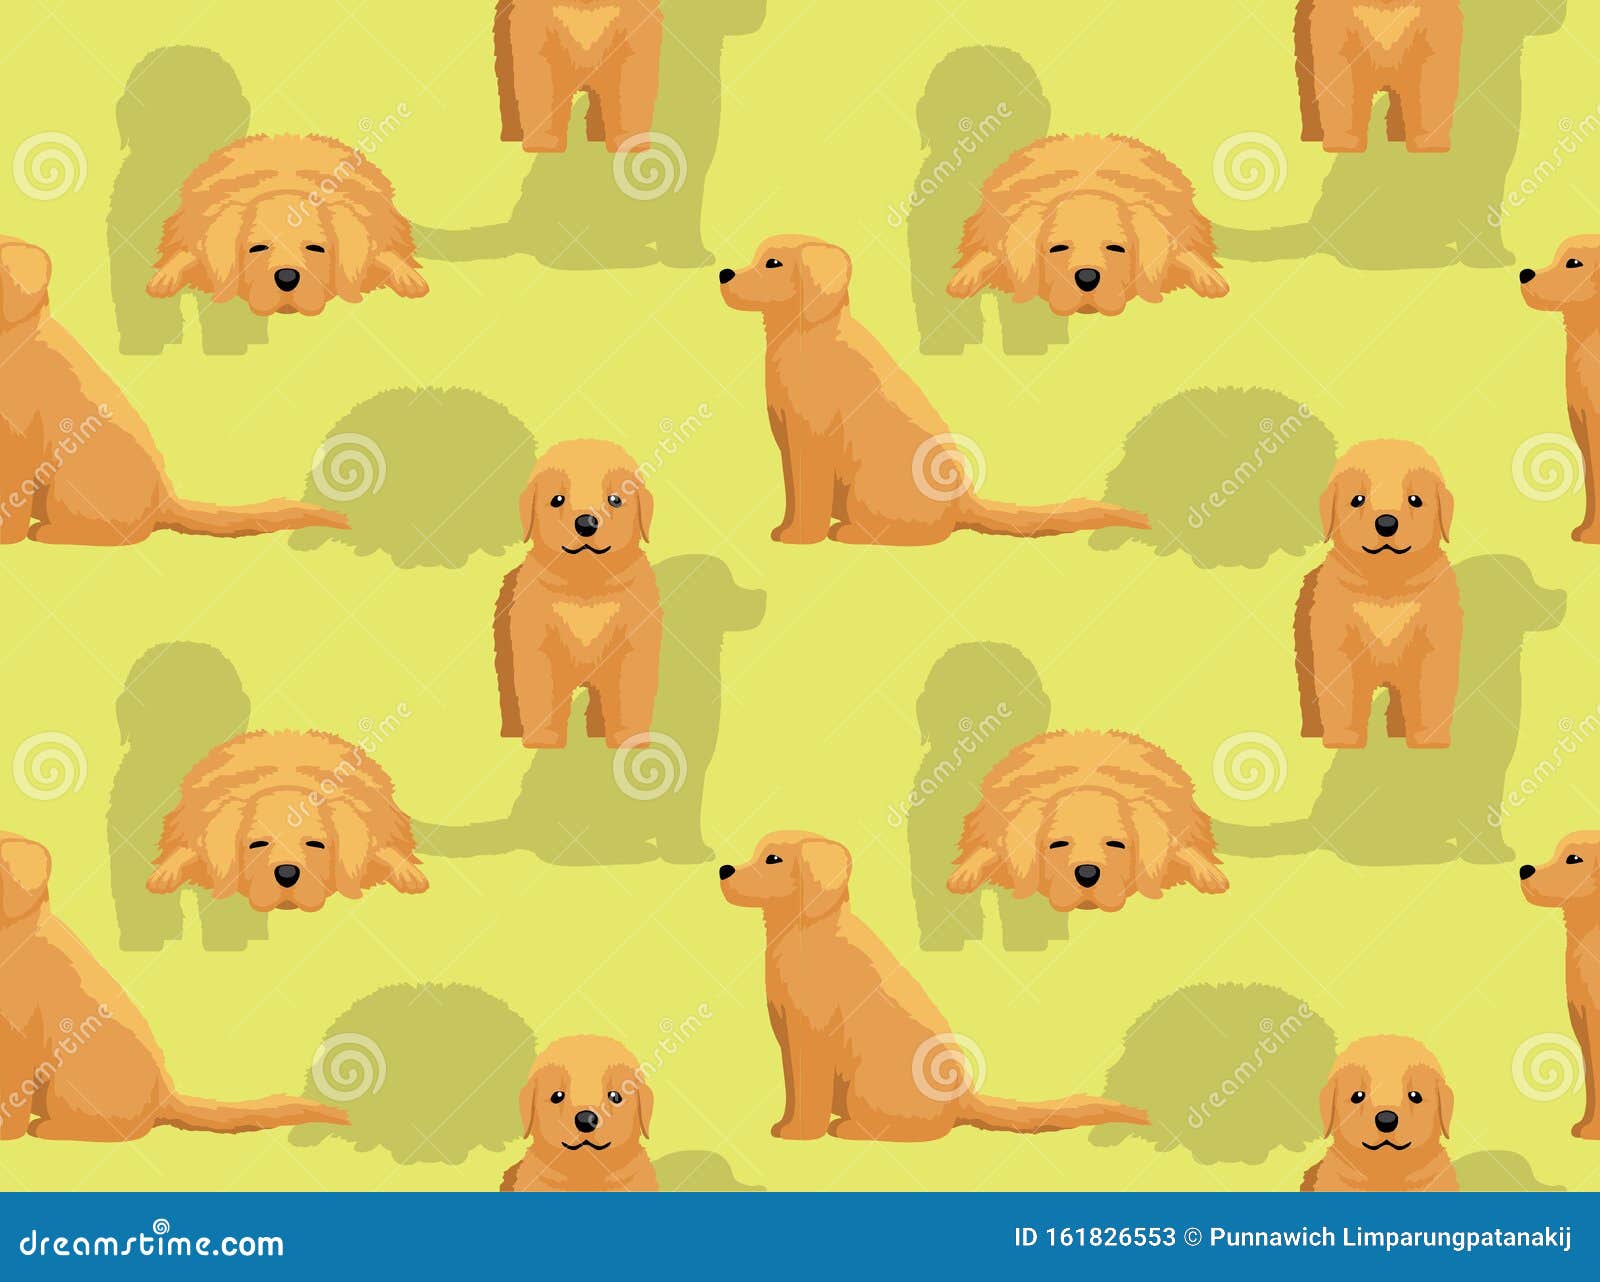 Golden Retriever Dog Pet HD Wallpapers Free Download  Desktop  Wallpapers